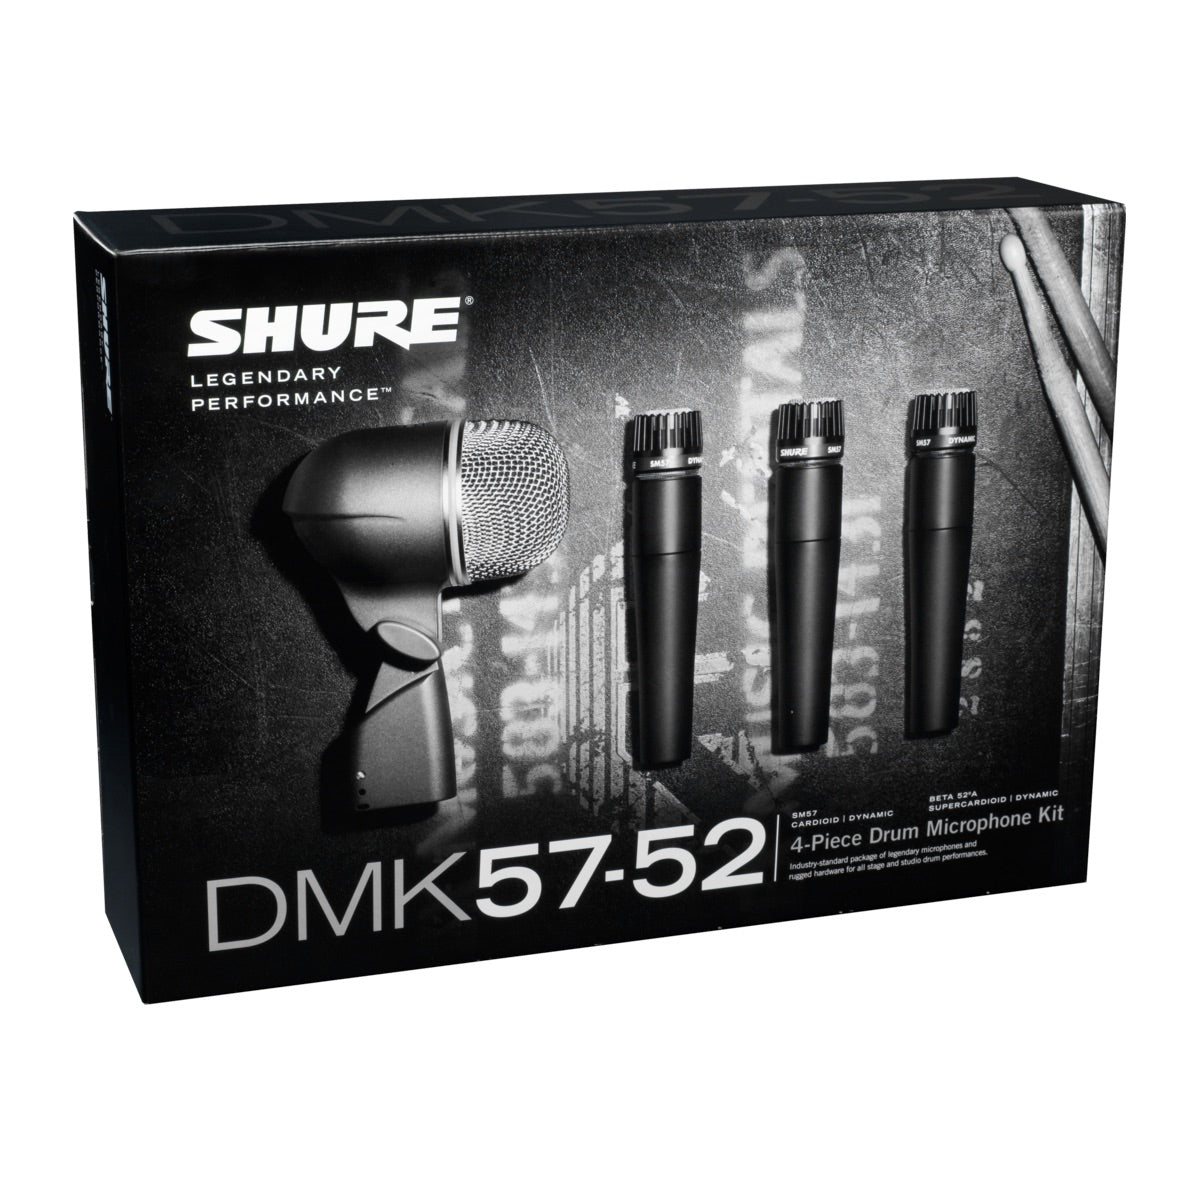 Shure DMK57-52 4-piece Drum Microphone Kit, box